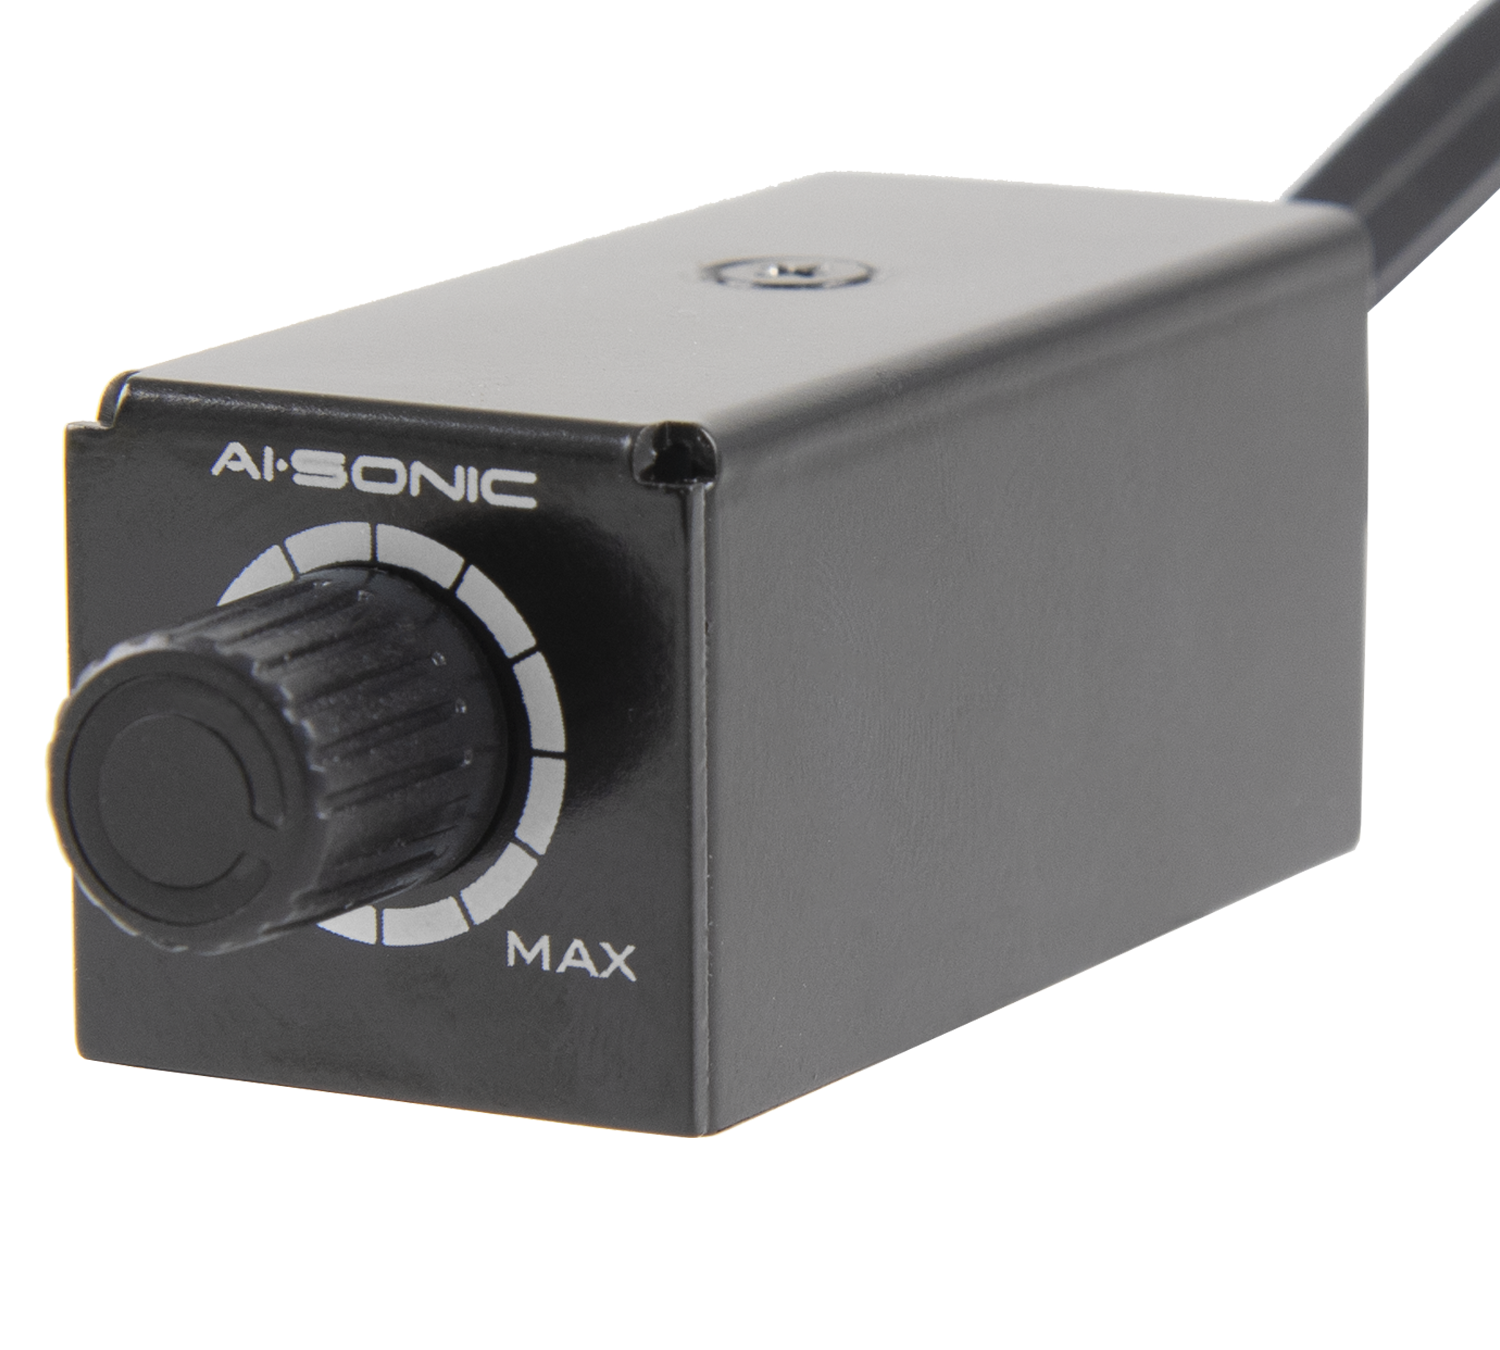 AI-SONIC bass remote control S2-BASS KNOB